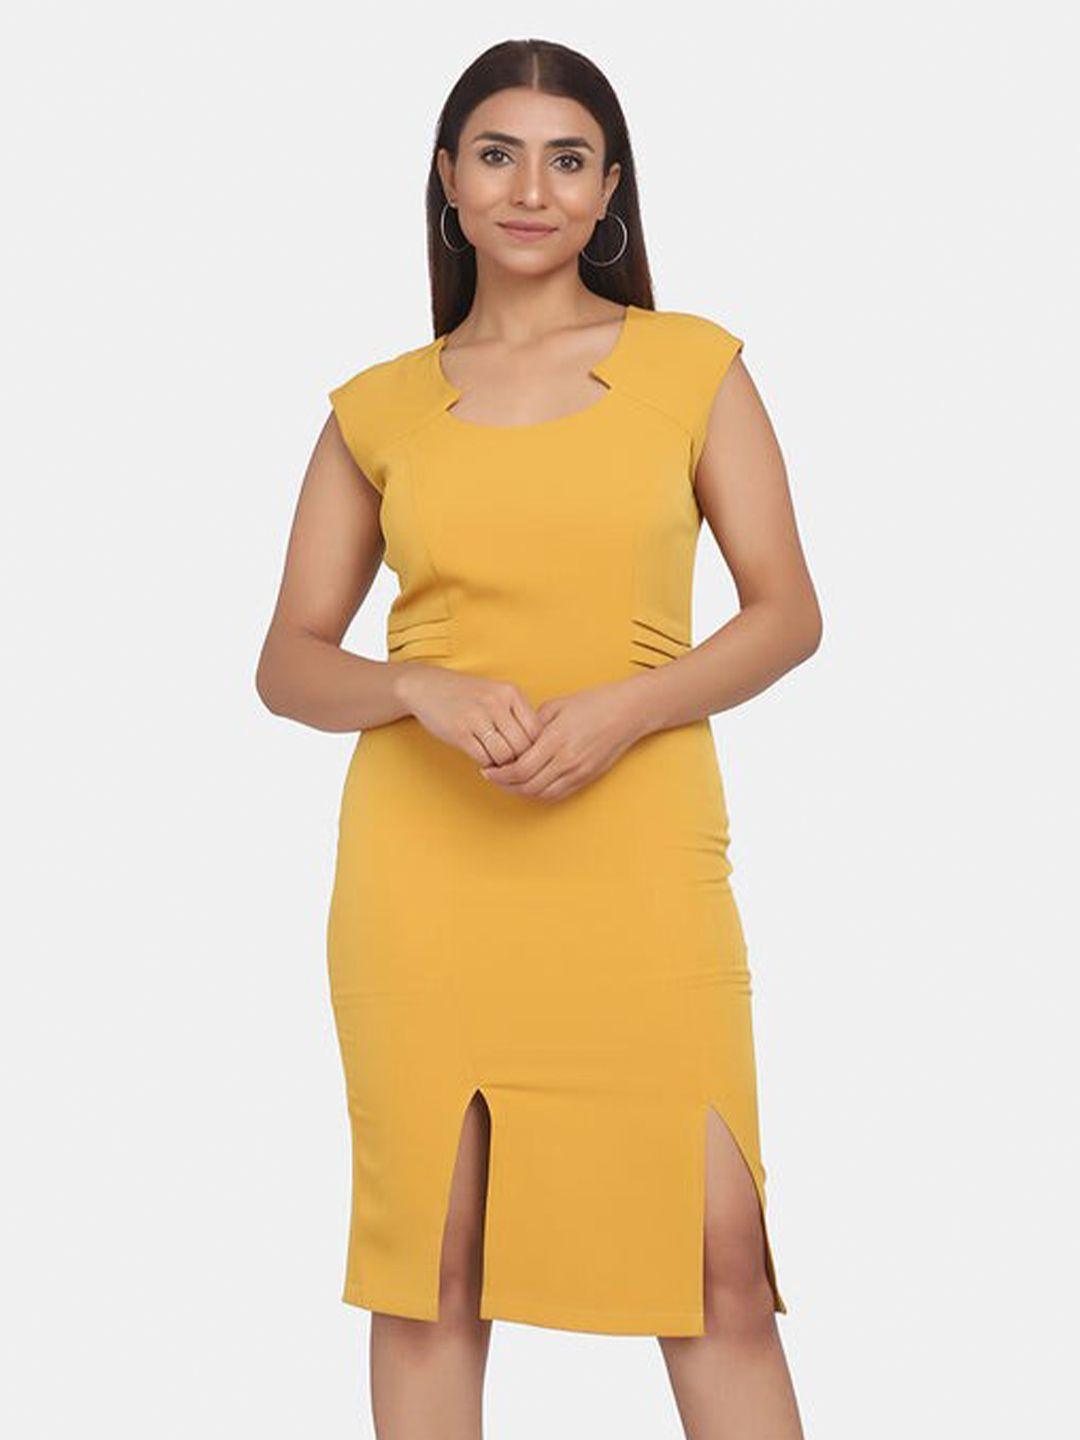 powersutra-mustard-yellow-formal-sheath-dress